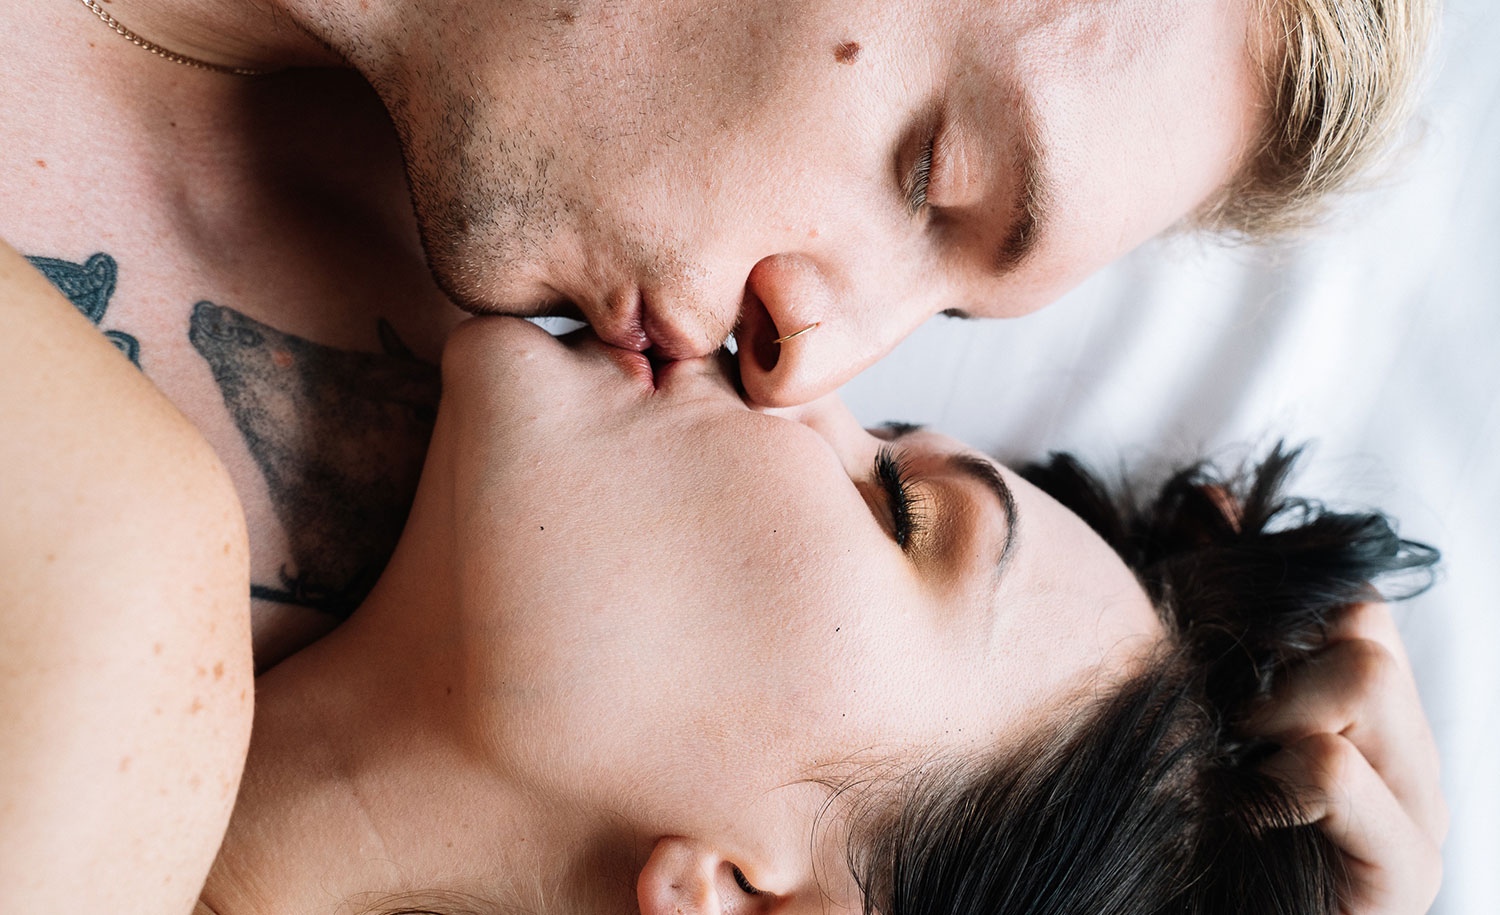 A sensitive man passionately kissing his female partner